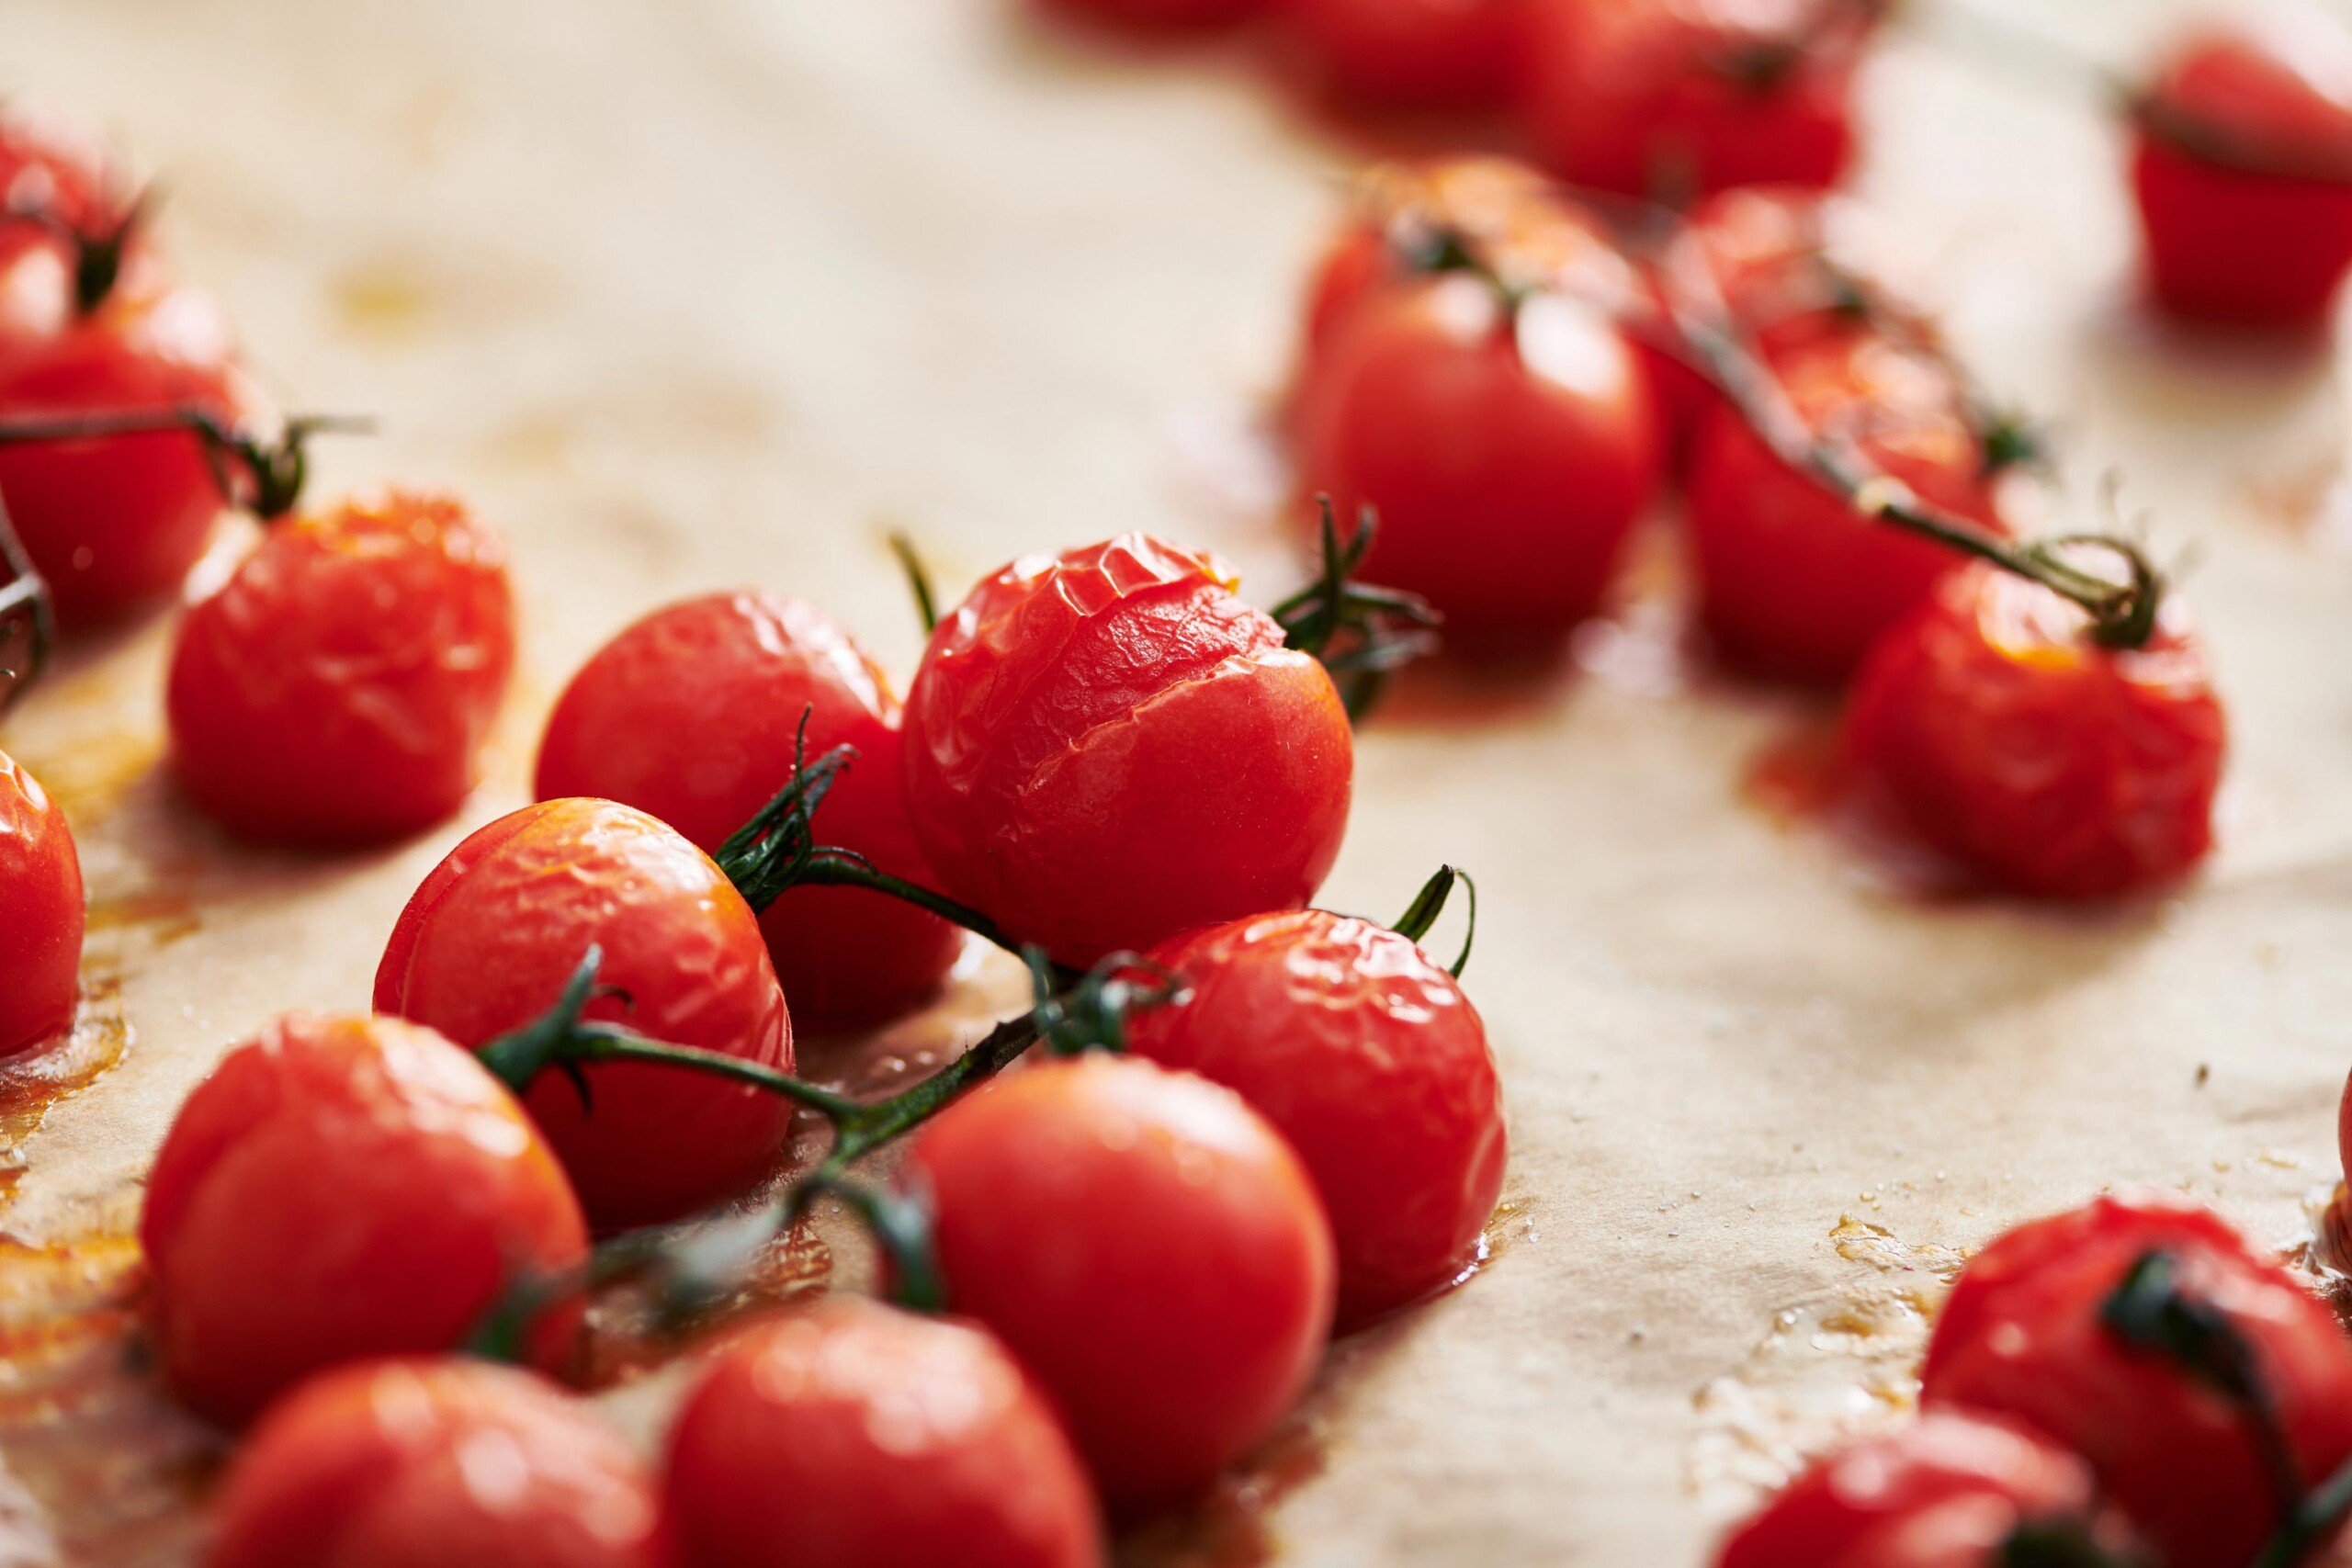 Roasted cherry tomatoes on baking sheet.